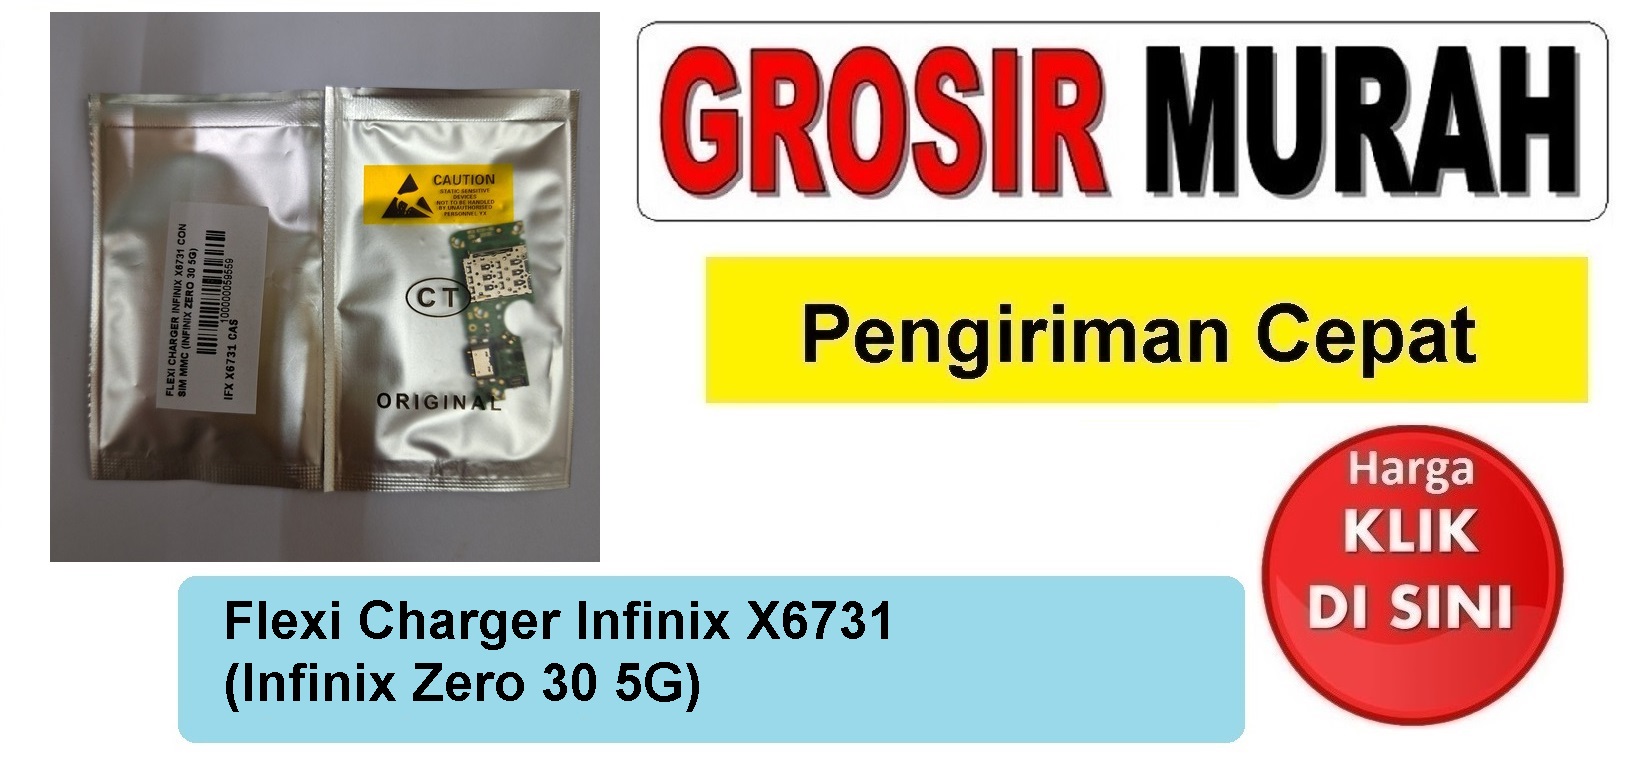 Flexi Charger Infinix X6731 Con Sim Mmc (Infinix Zero 30 5G) Fleksibel Flexible Fleksi Flexibel Flex Con Tc Connector Pcb Konektor cas papan board charging